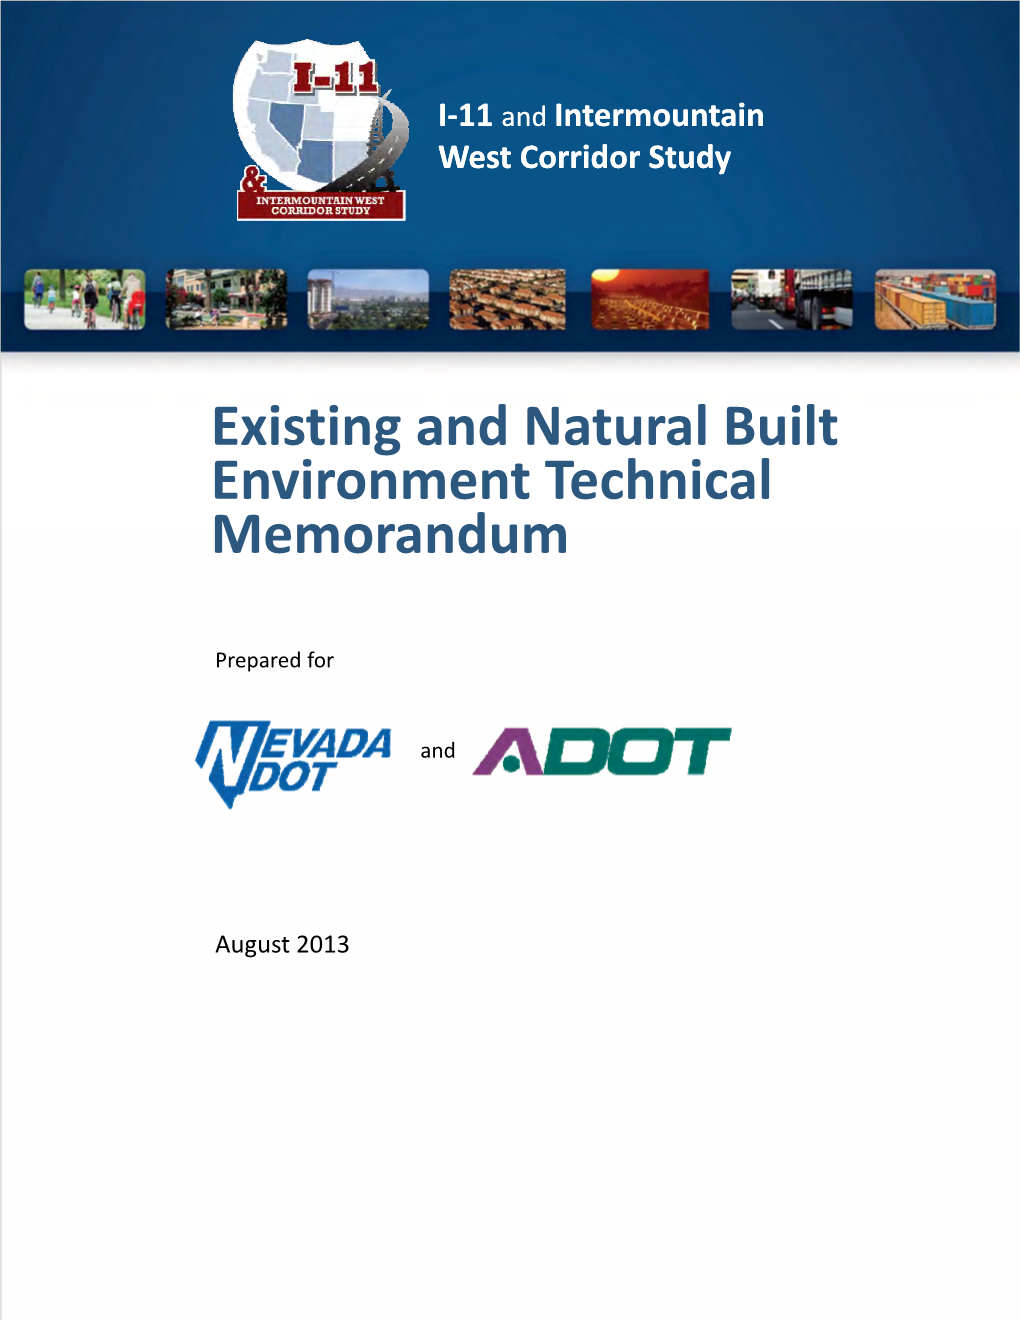 Existing and Natural Built Environment Technical Memorandum